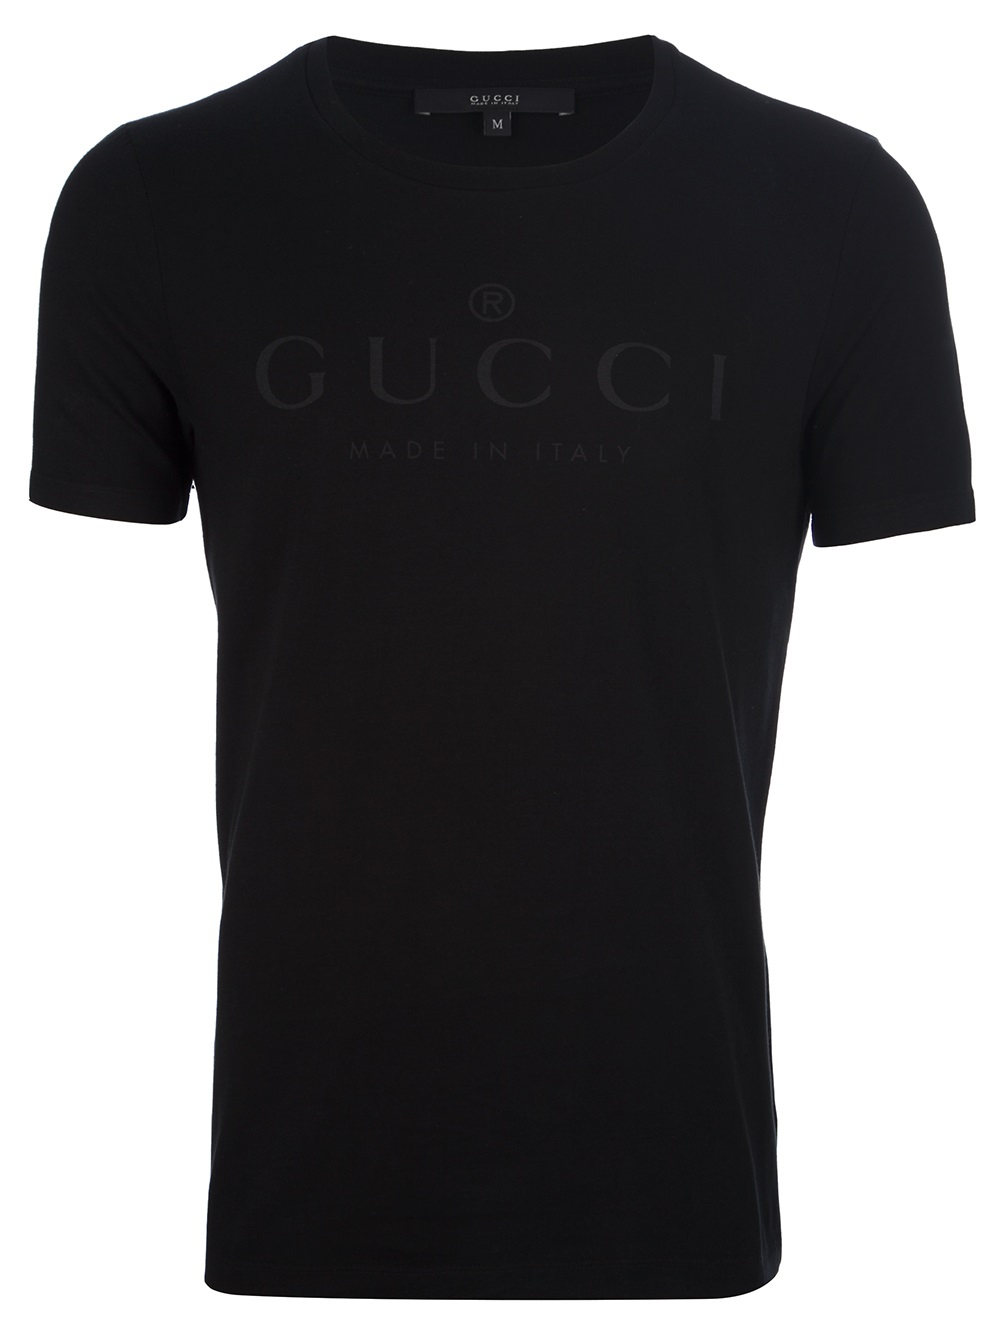 black gucci shirt mens